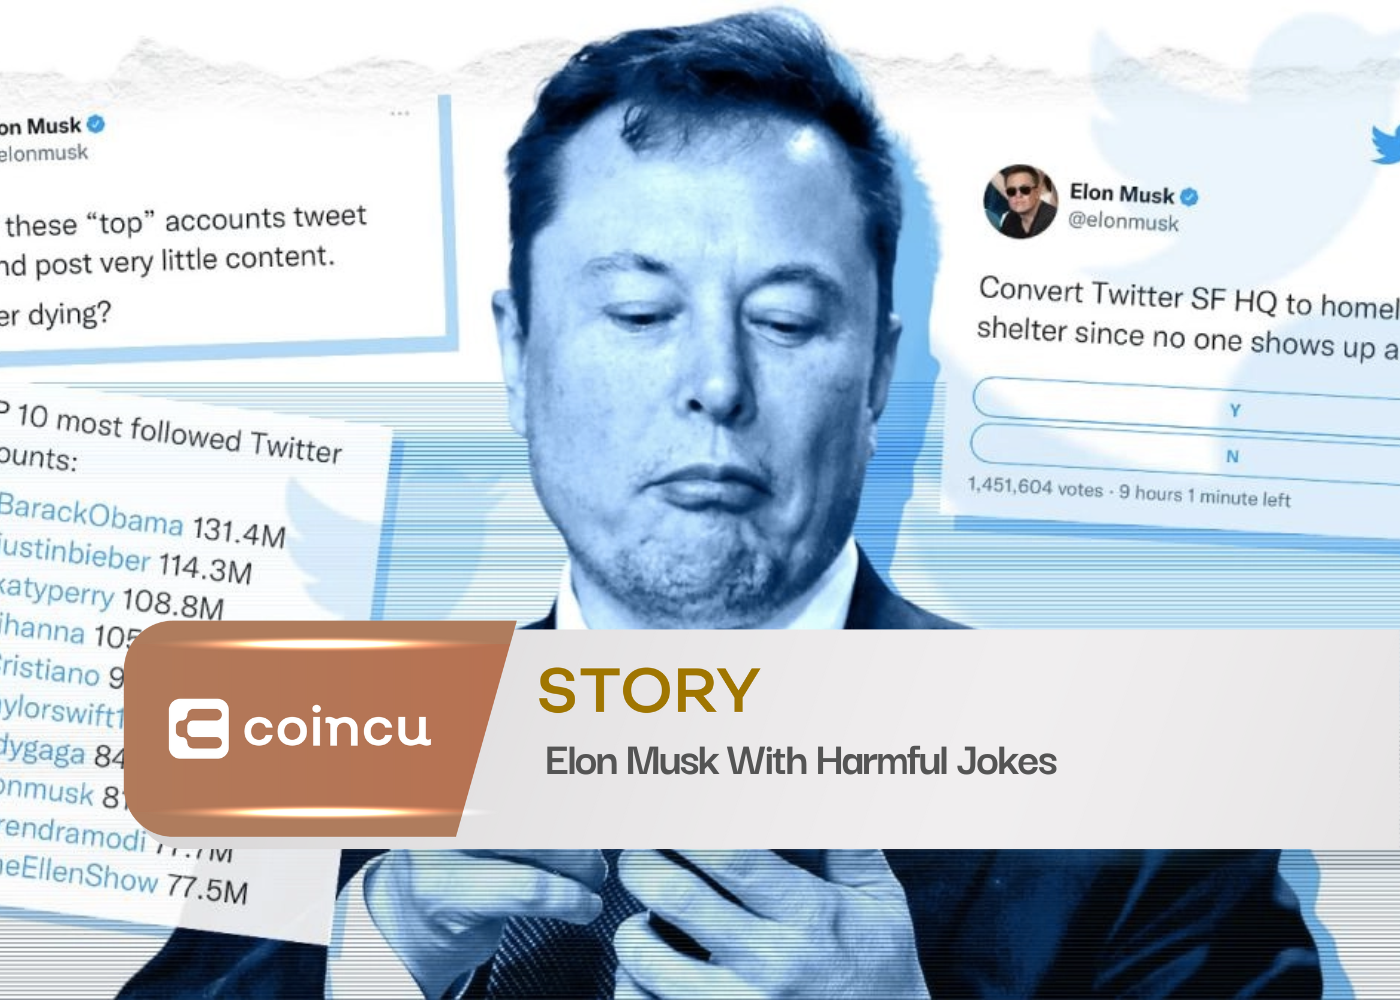 Elon Musk With Harmful Jokes